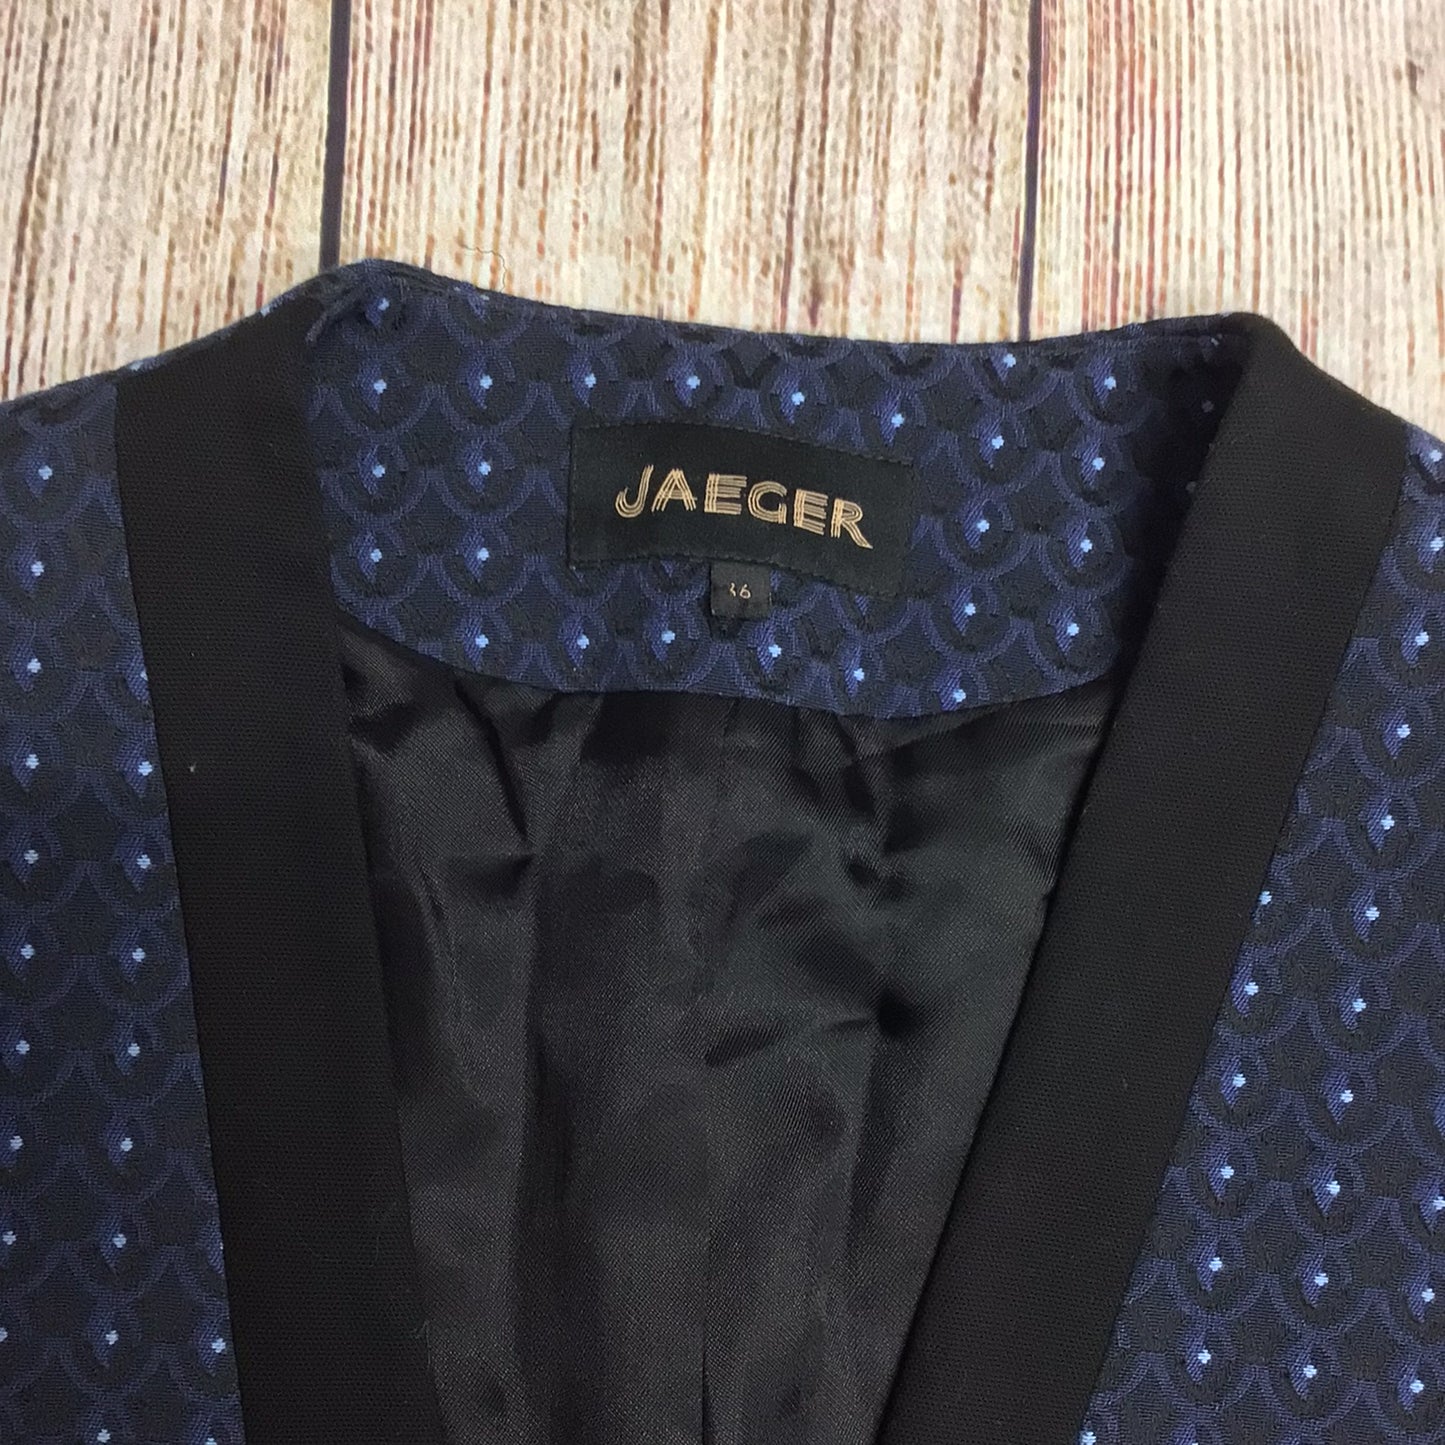 Jaeger Navy Blue Cotton Blend Patterned Blazer Size 16